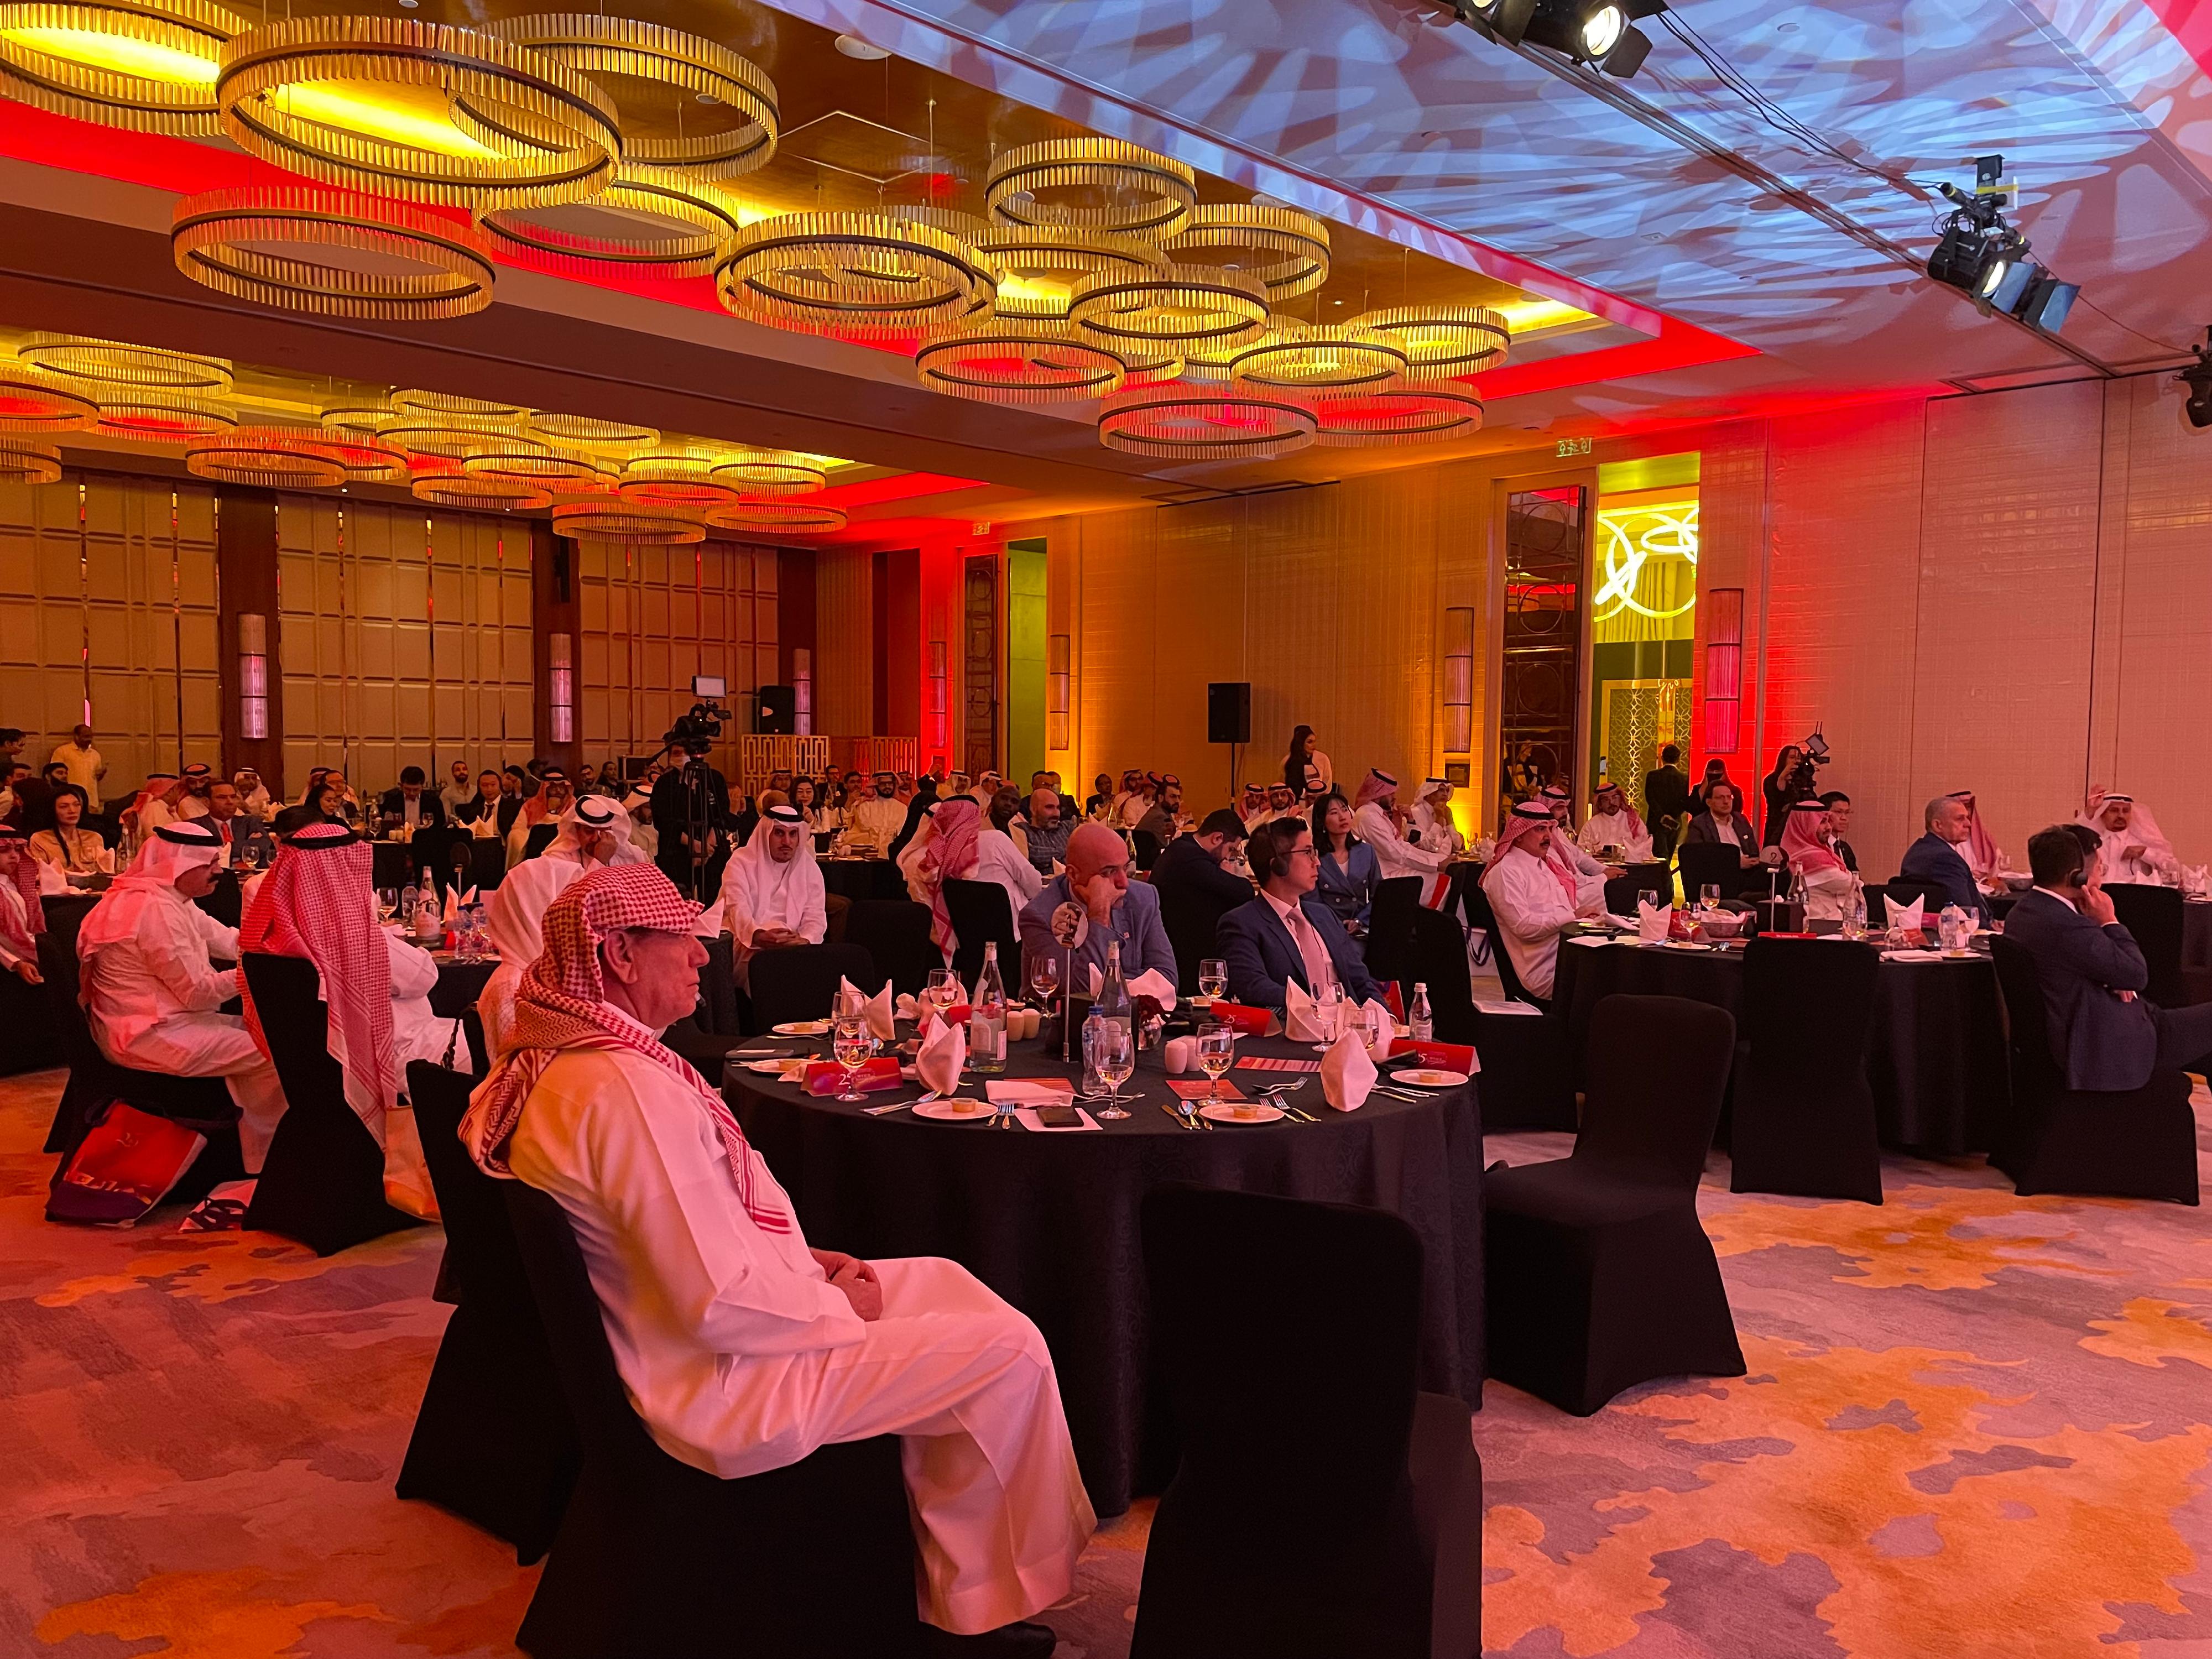 The Hong Kong Economic and Trade Office in Dubai (Dubai ETO) held a business seminar in Riyadh, Saudi Arabia, on November 10 (Riyadh time) to celebrate the 25th anniversary of the establishment of the Hong Kong Special Administrative Region. Photo shows guests attending the seminar.